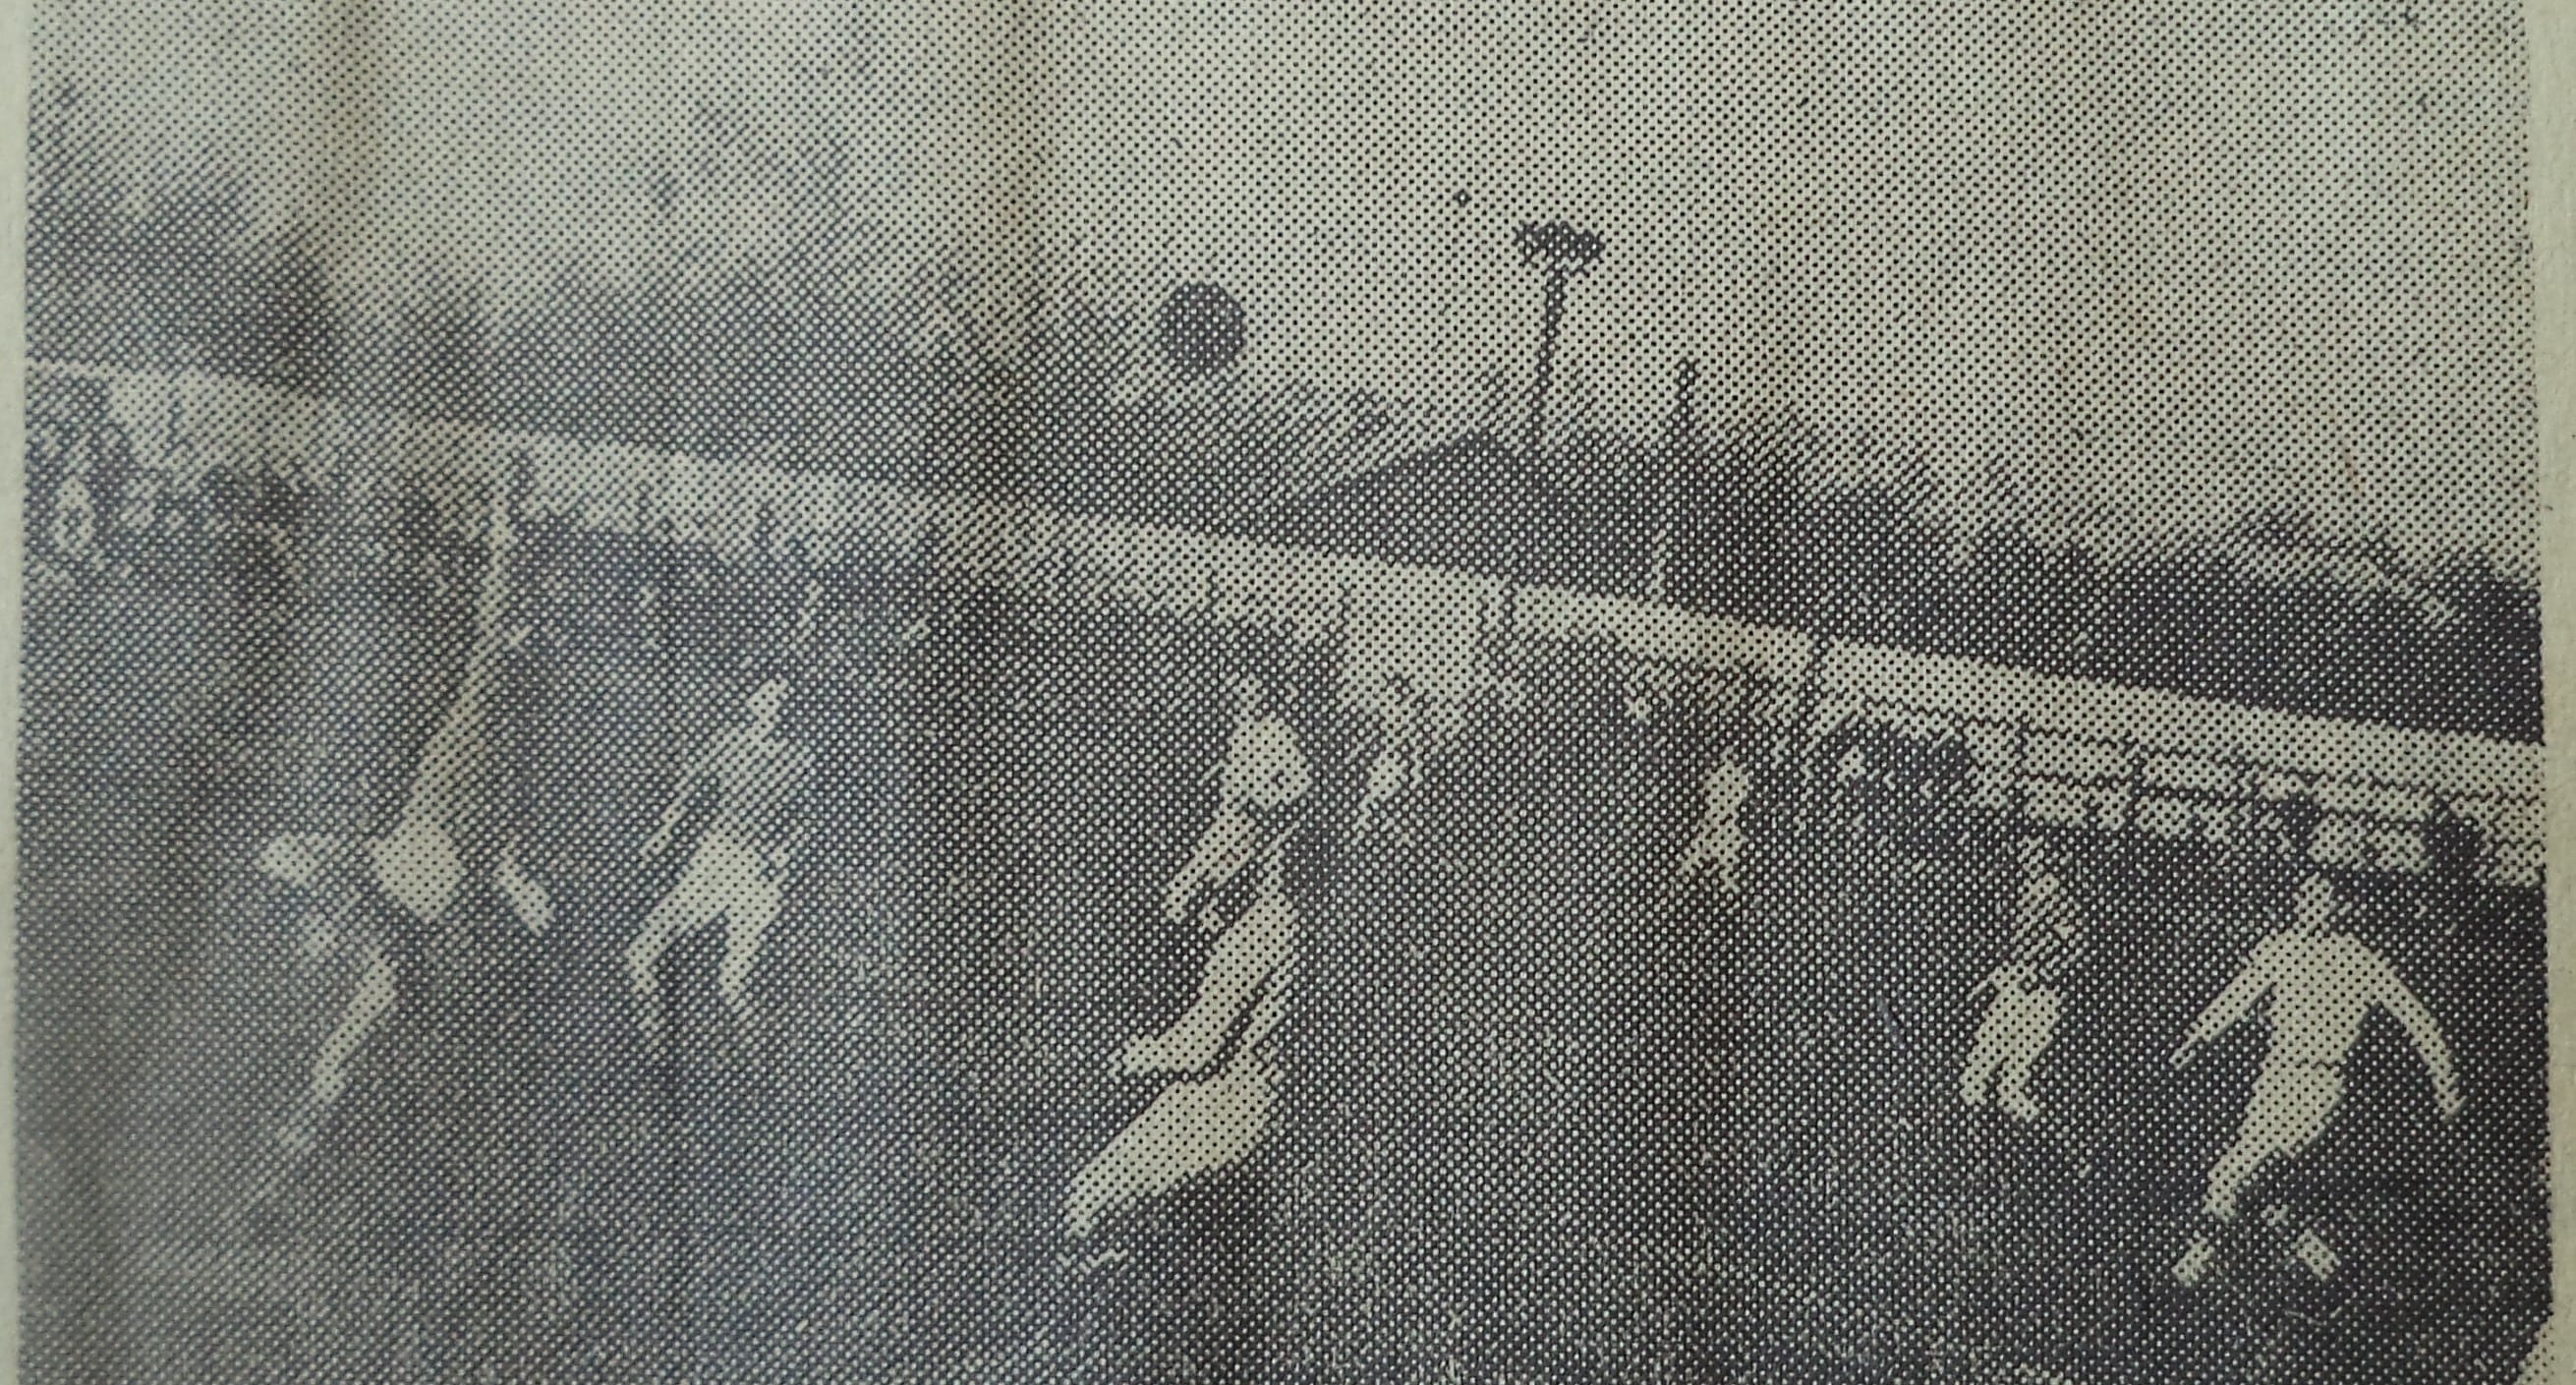 Стадион Нефтяник 1964 год